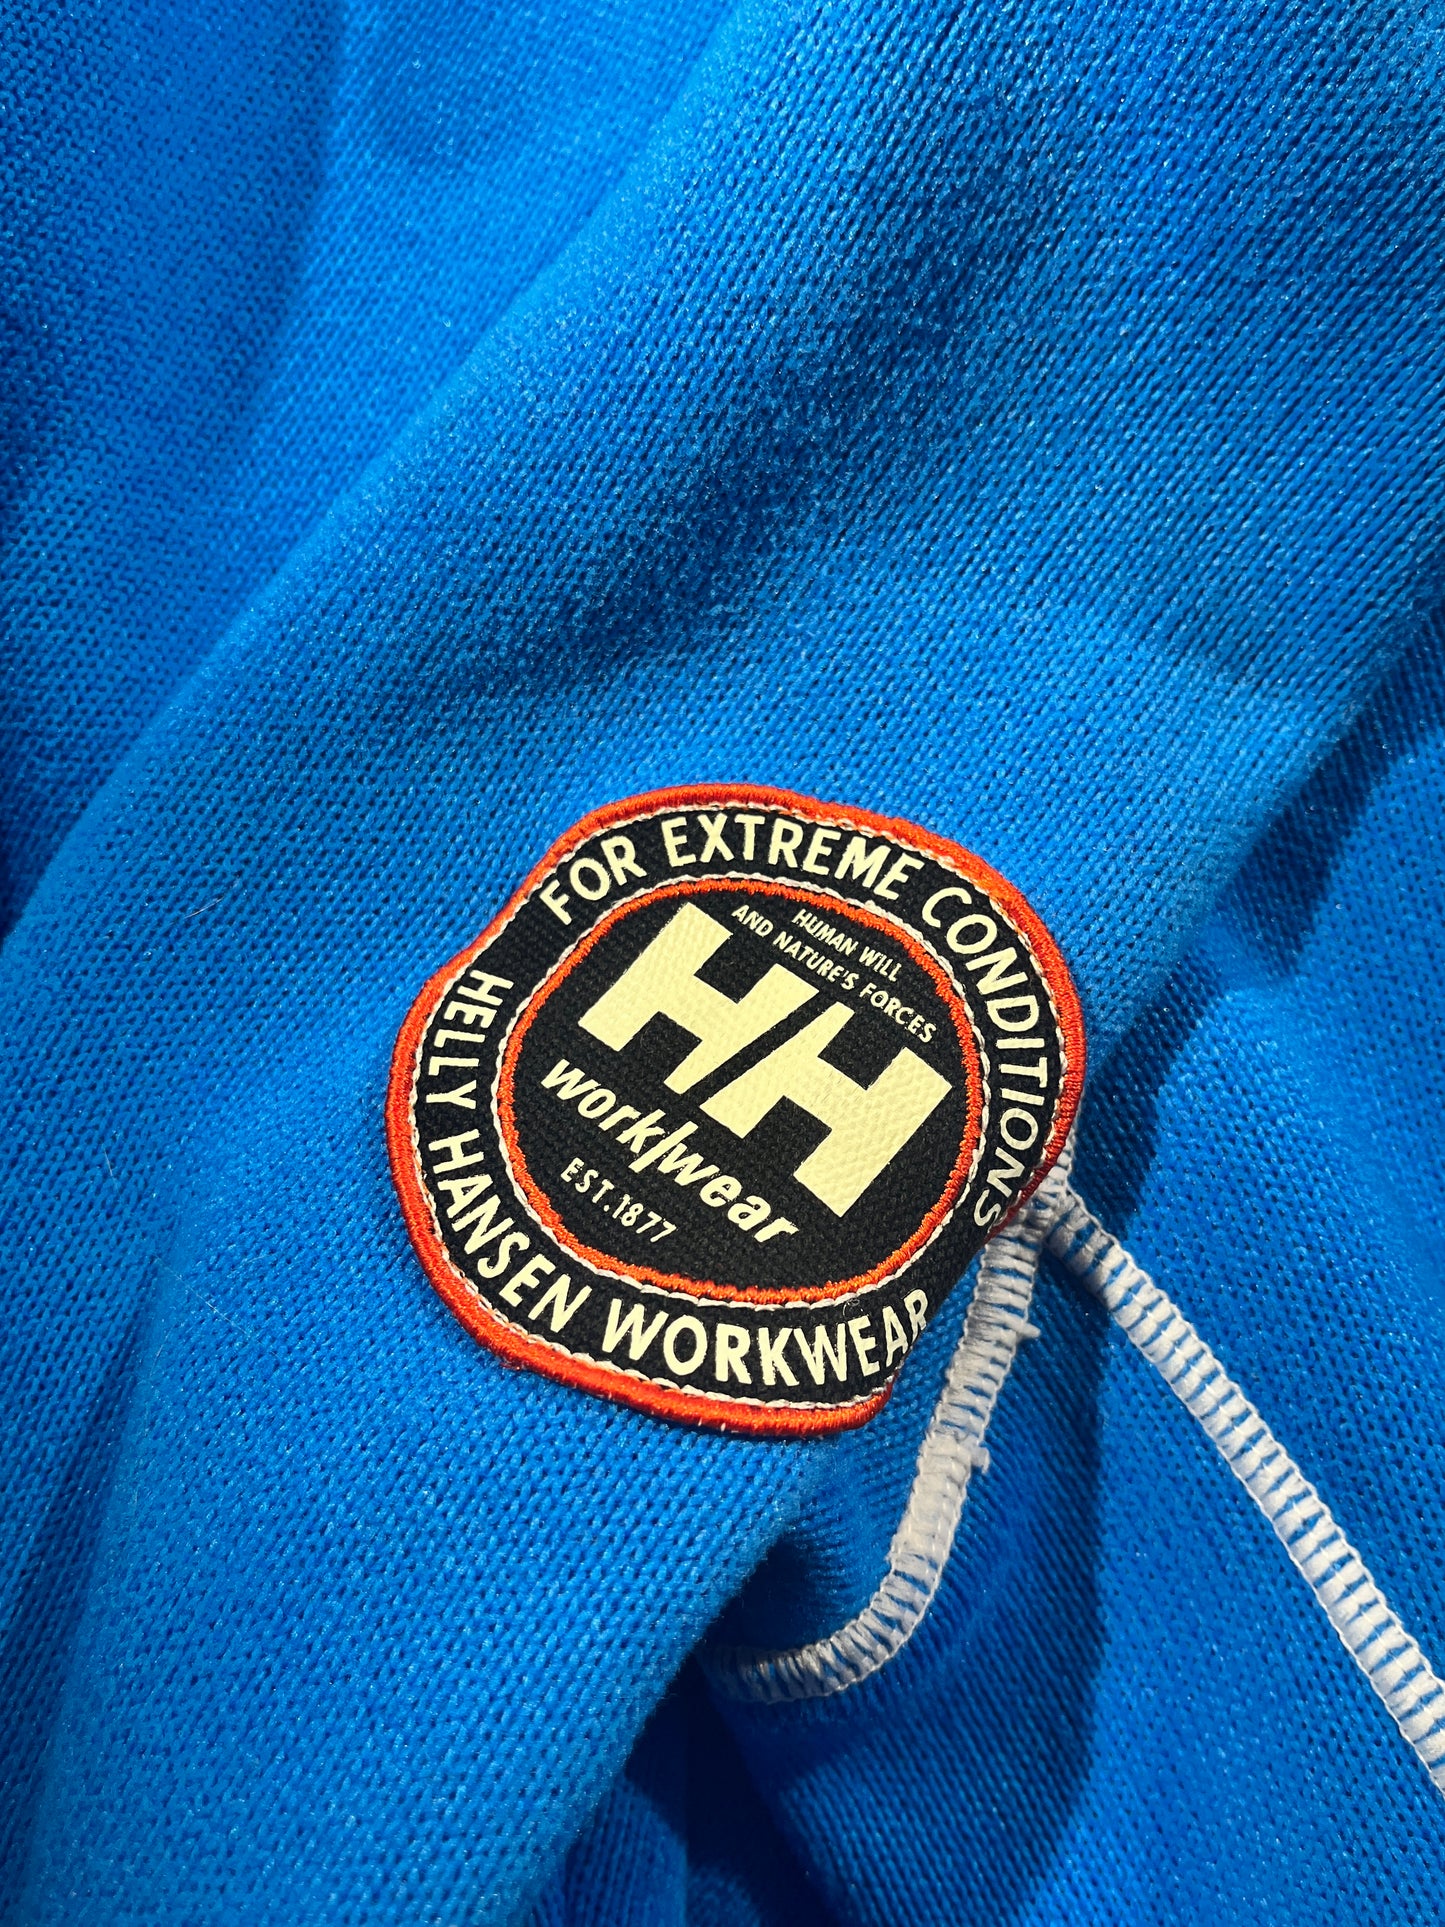 Vintage Helly Hanson Fleece Jacket Zip Up Work Wear